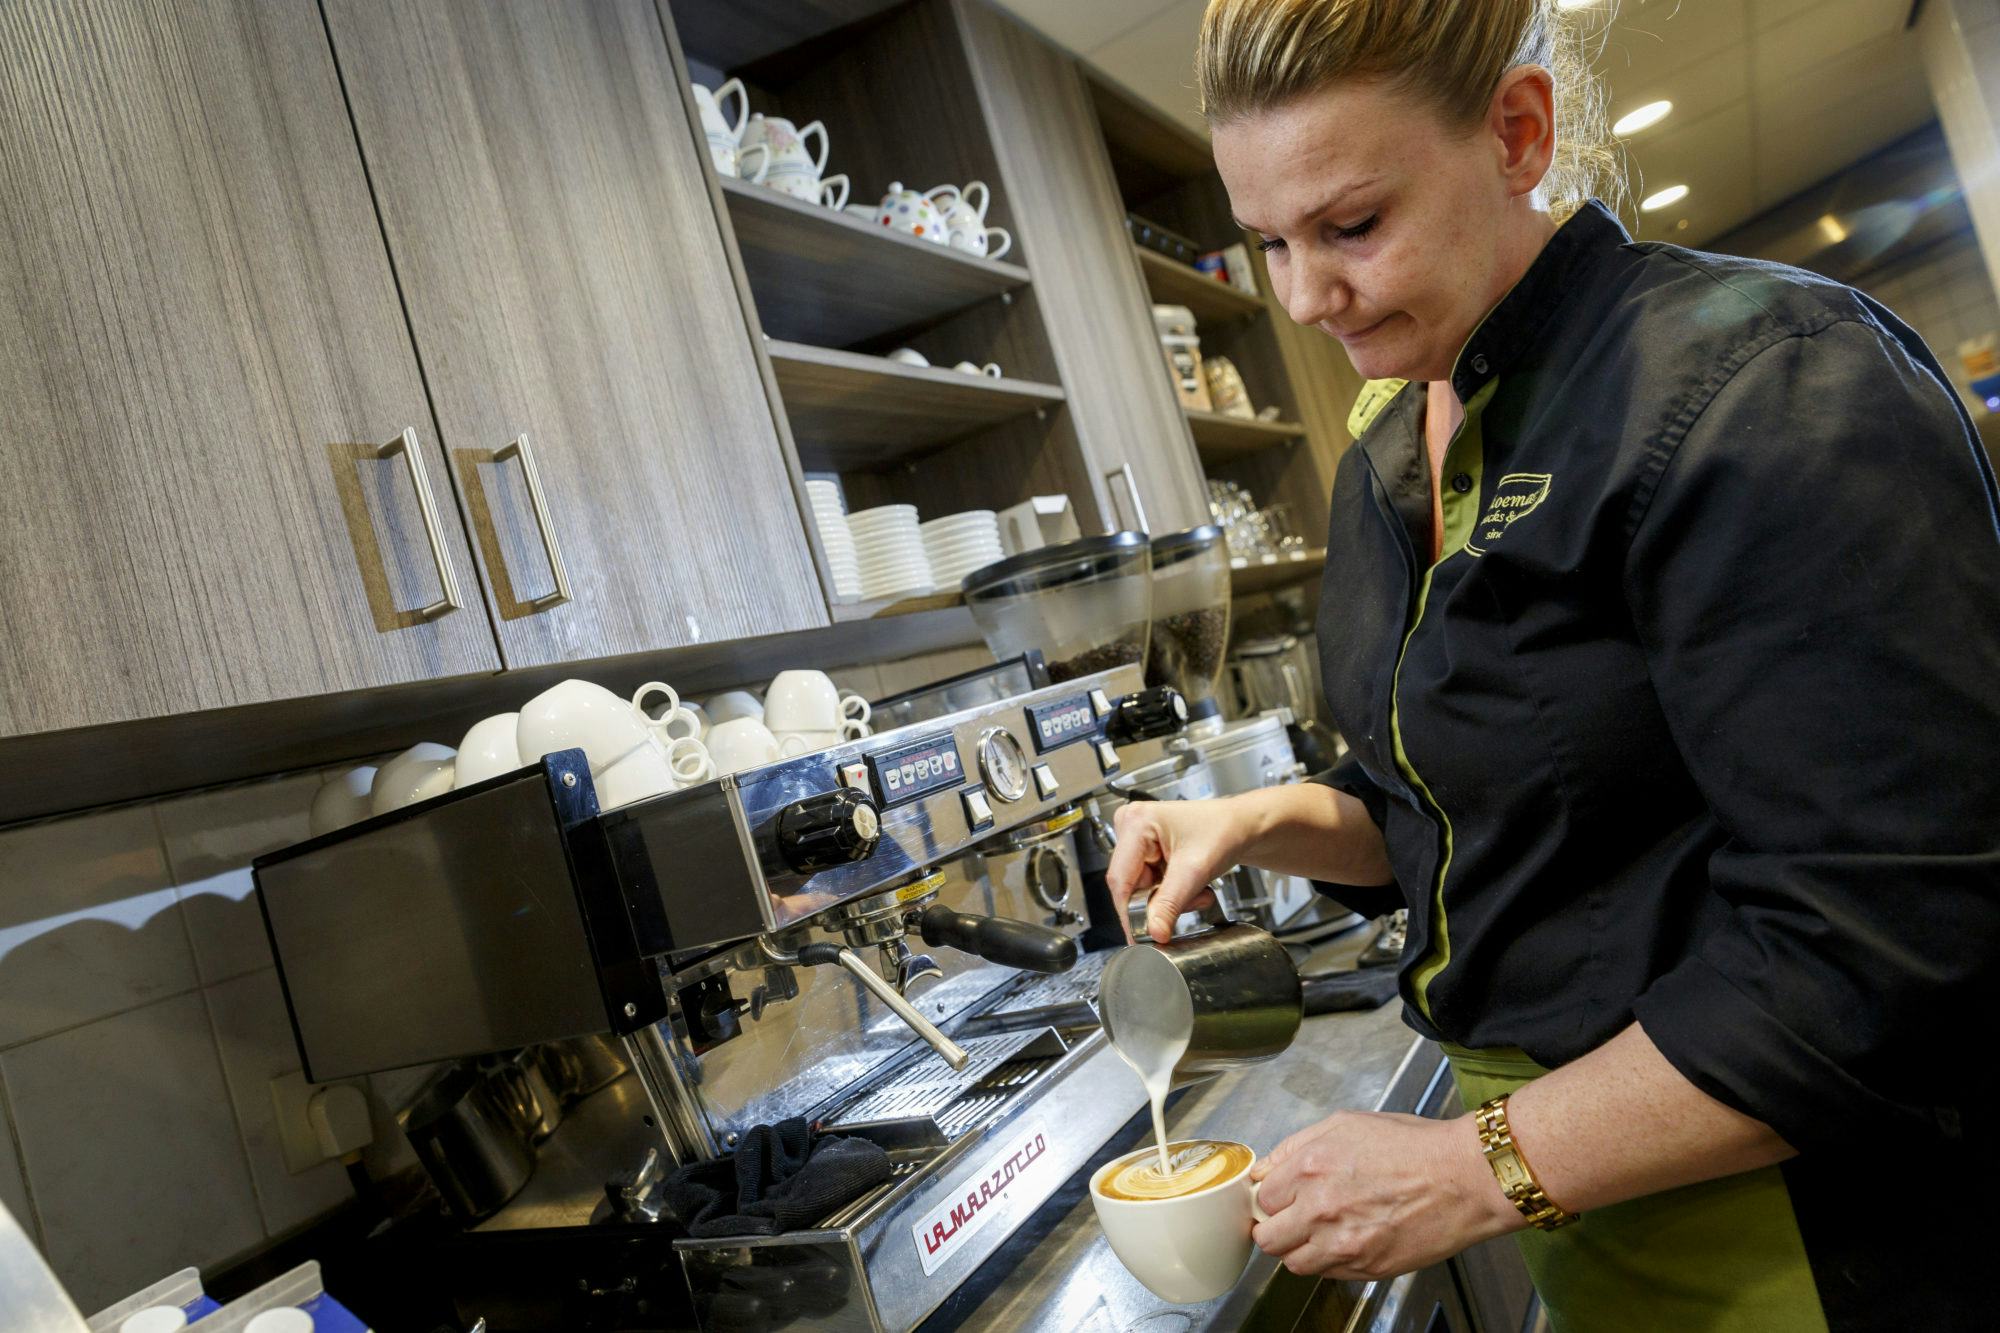 Kwaliteitskoffie in de cafetaria: 4 tips